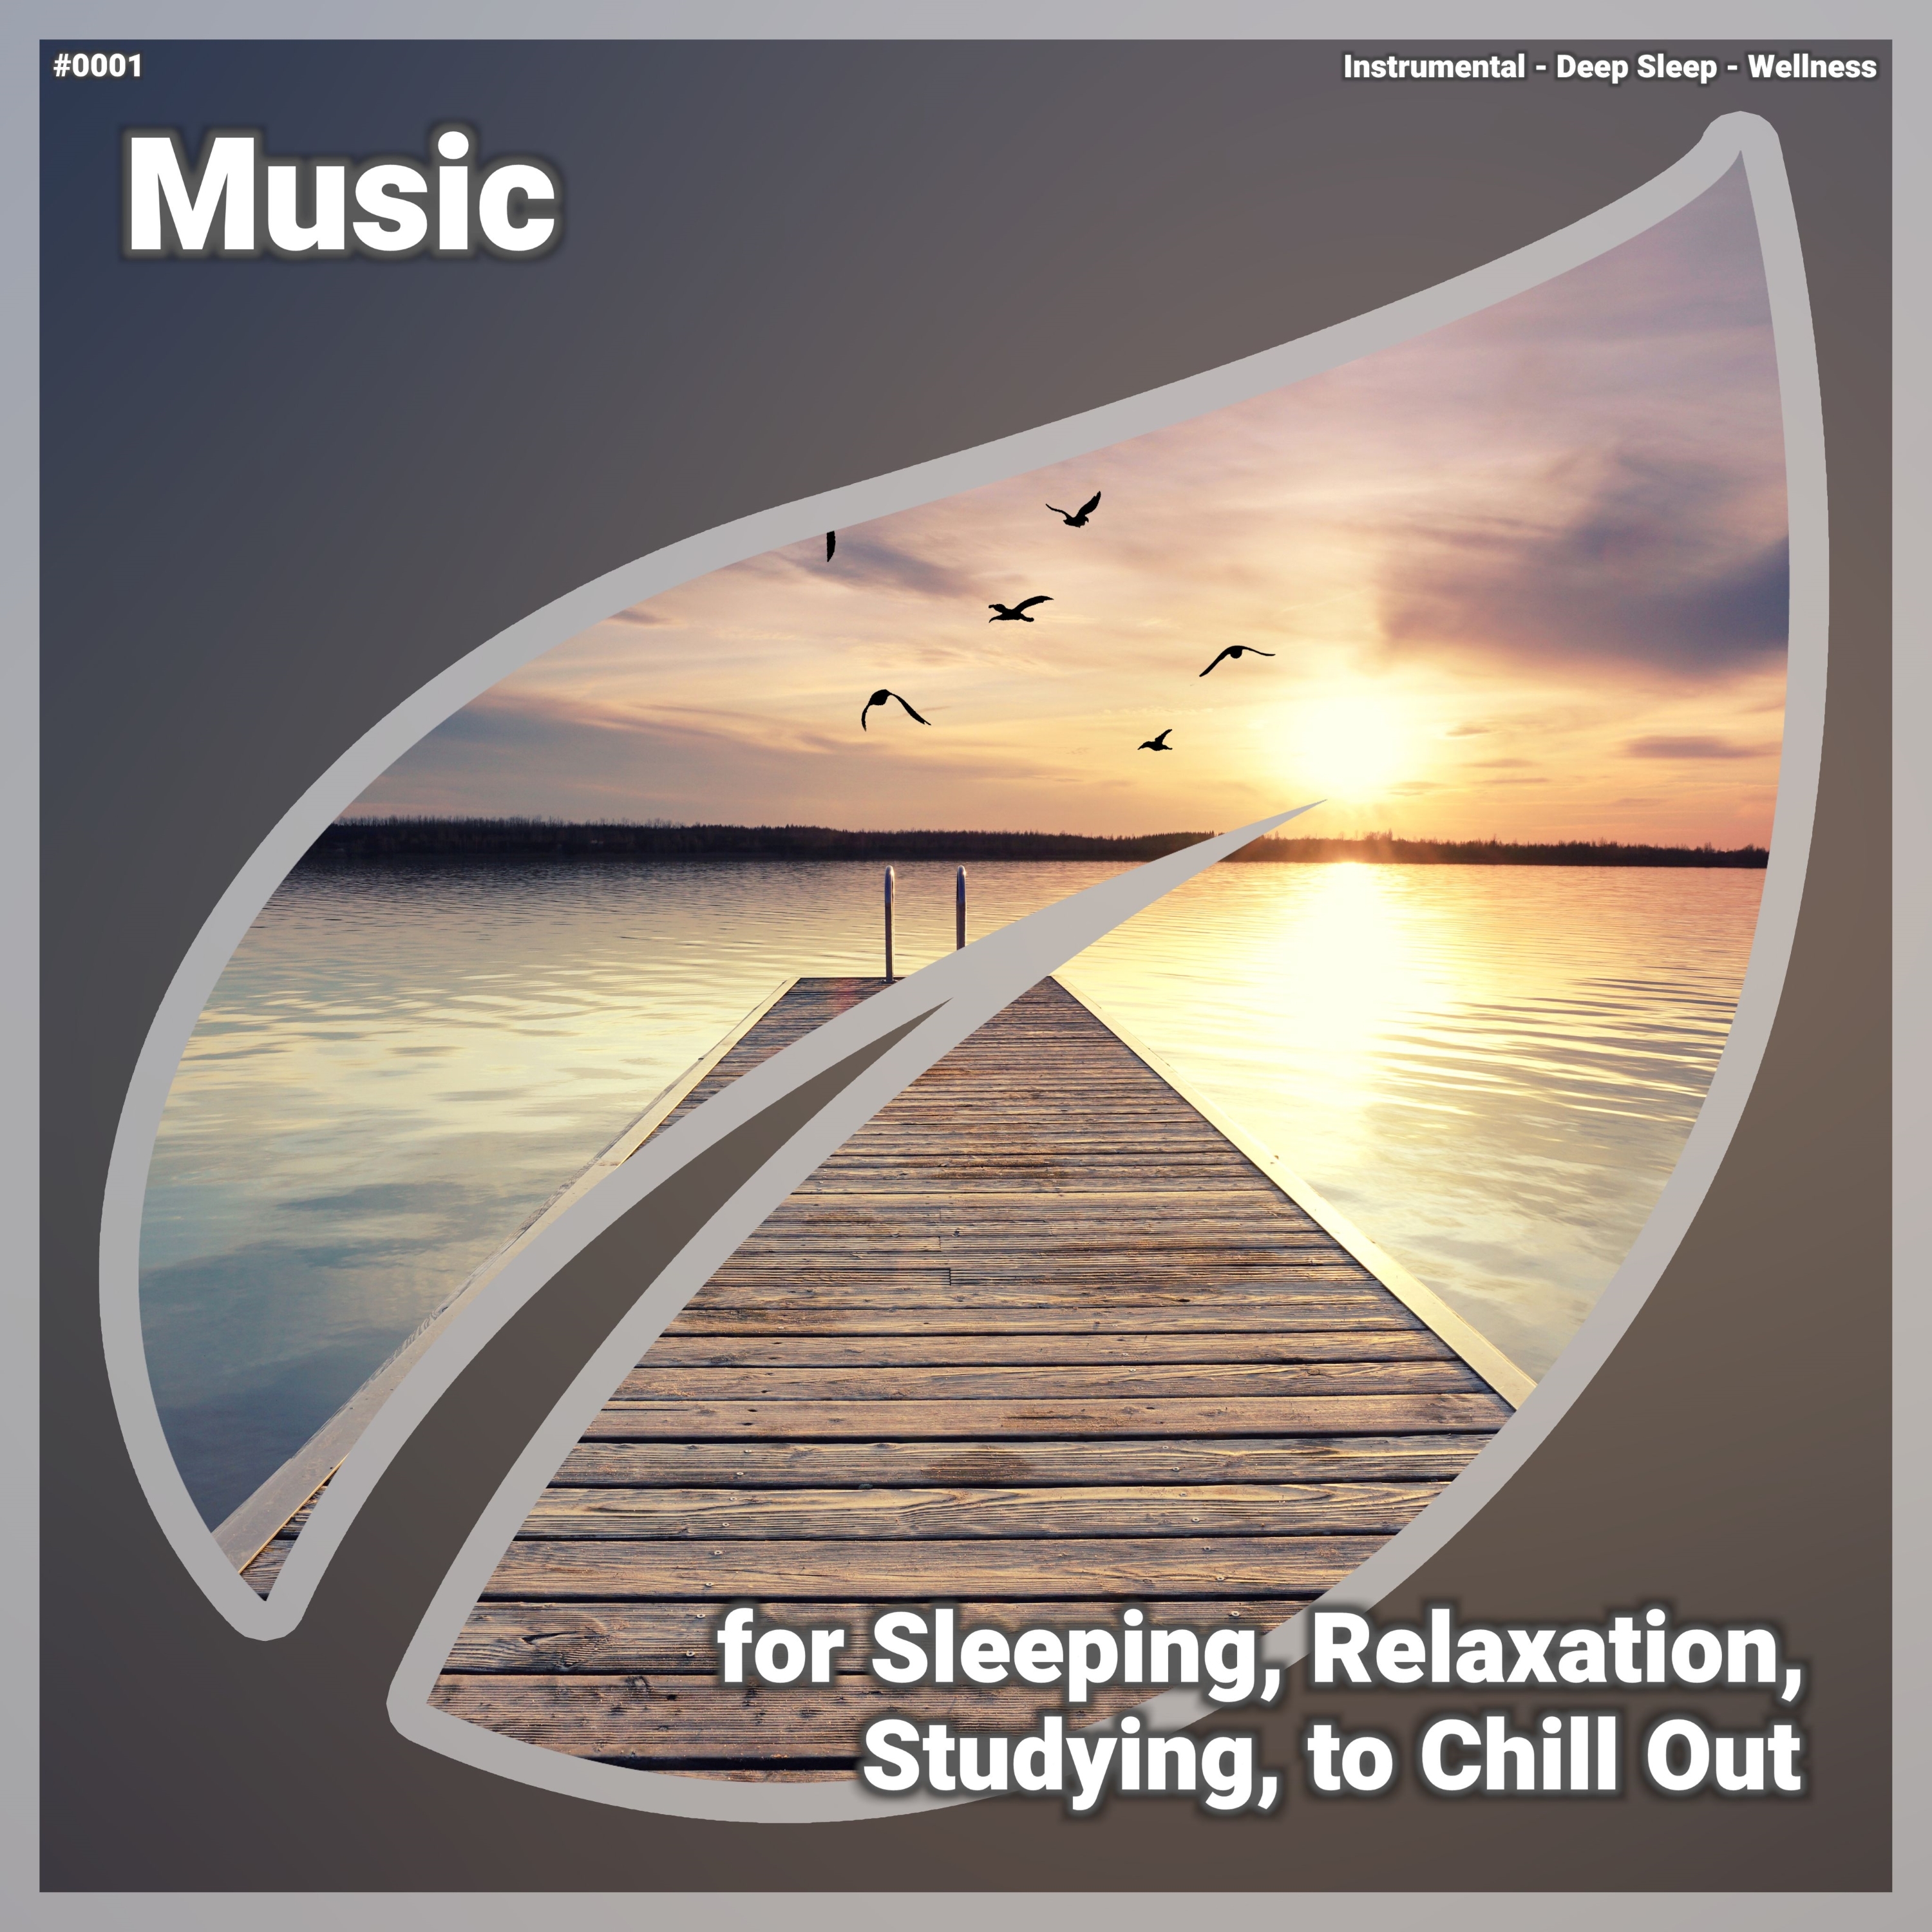 डाउनलोड करा Relaxing Music, Pt. 48